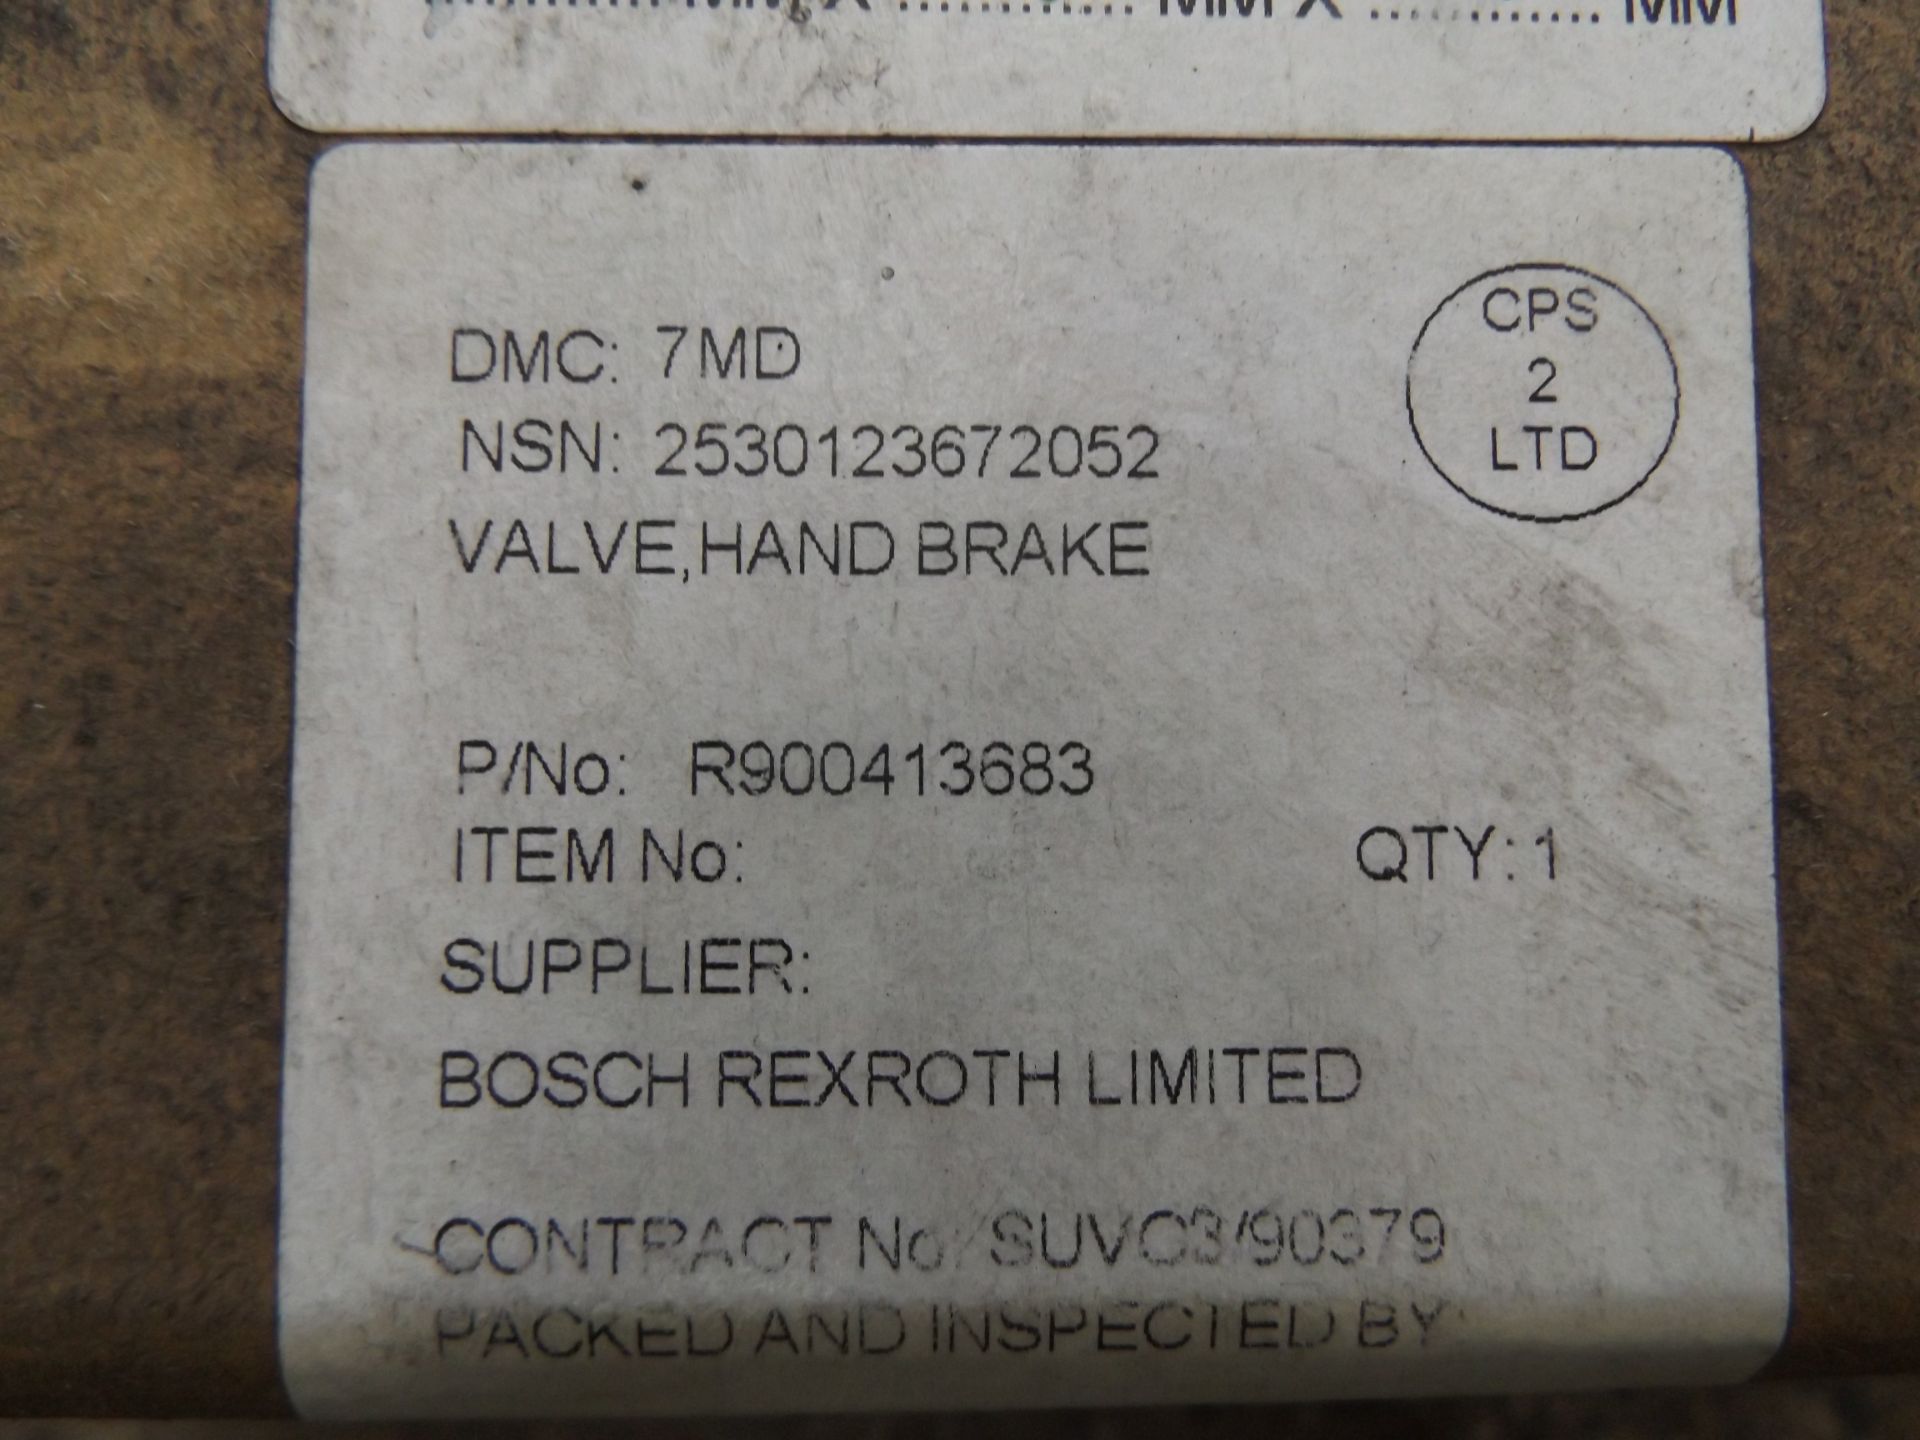 4 x Bosch Rexroth Hand Brake Valve Assy P/No R900413683 - Image 4 of 4